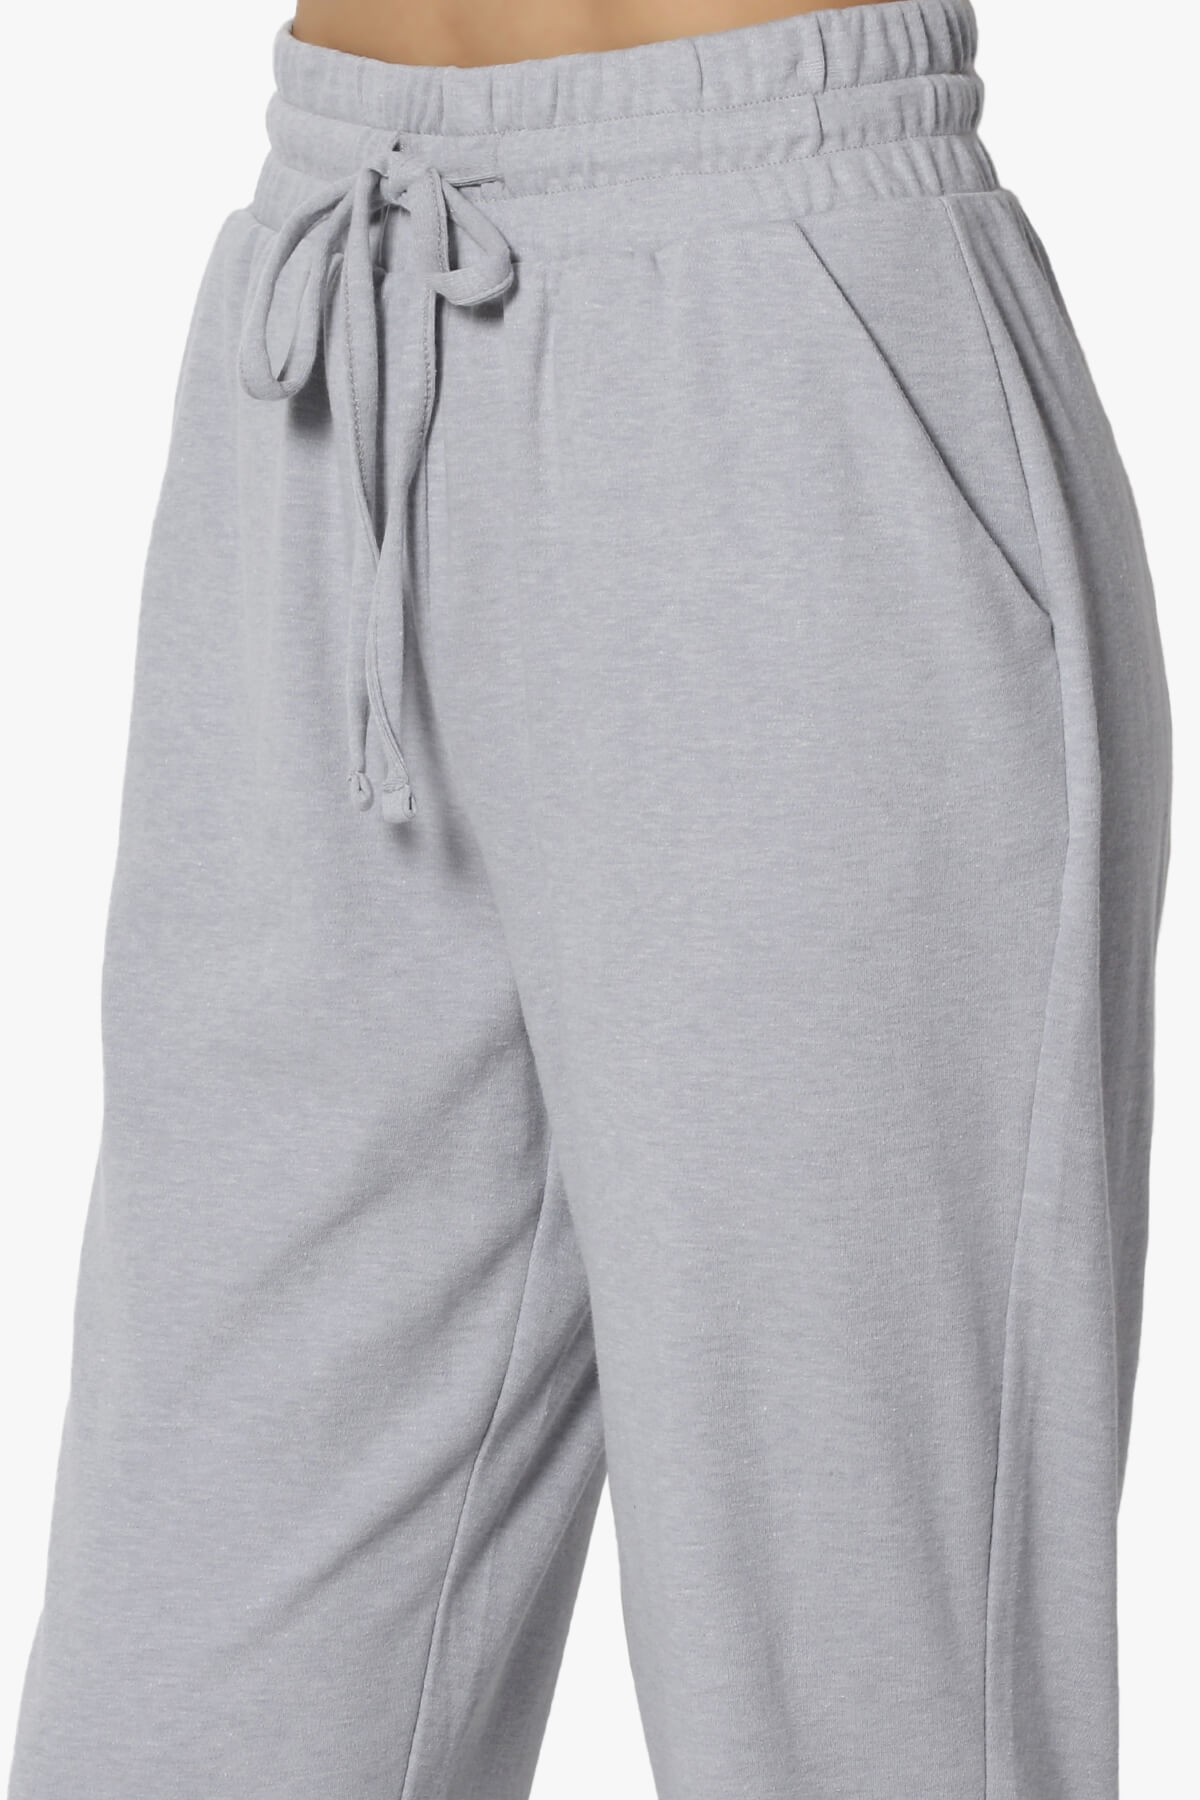 TheMogan Women's Lounge Cotton Long Sleeve T-Shirt & Drawstring Jogger Pants SET